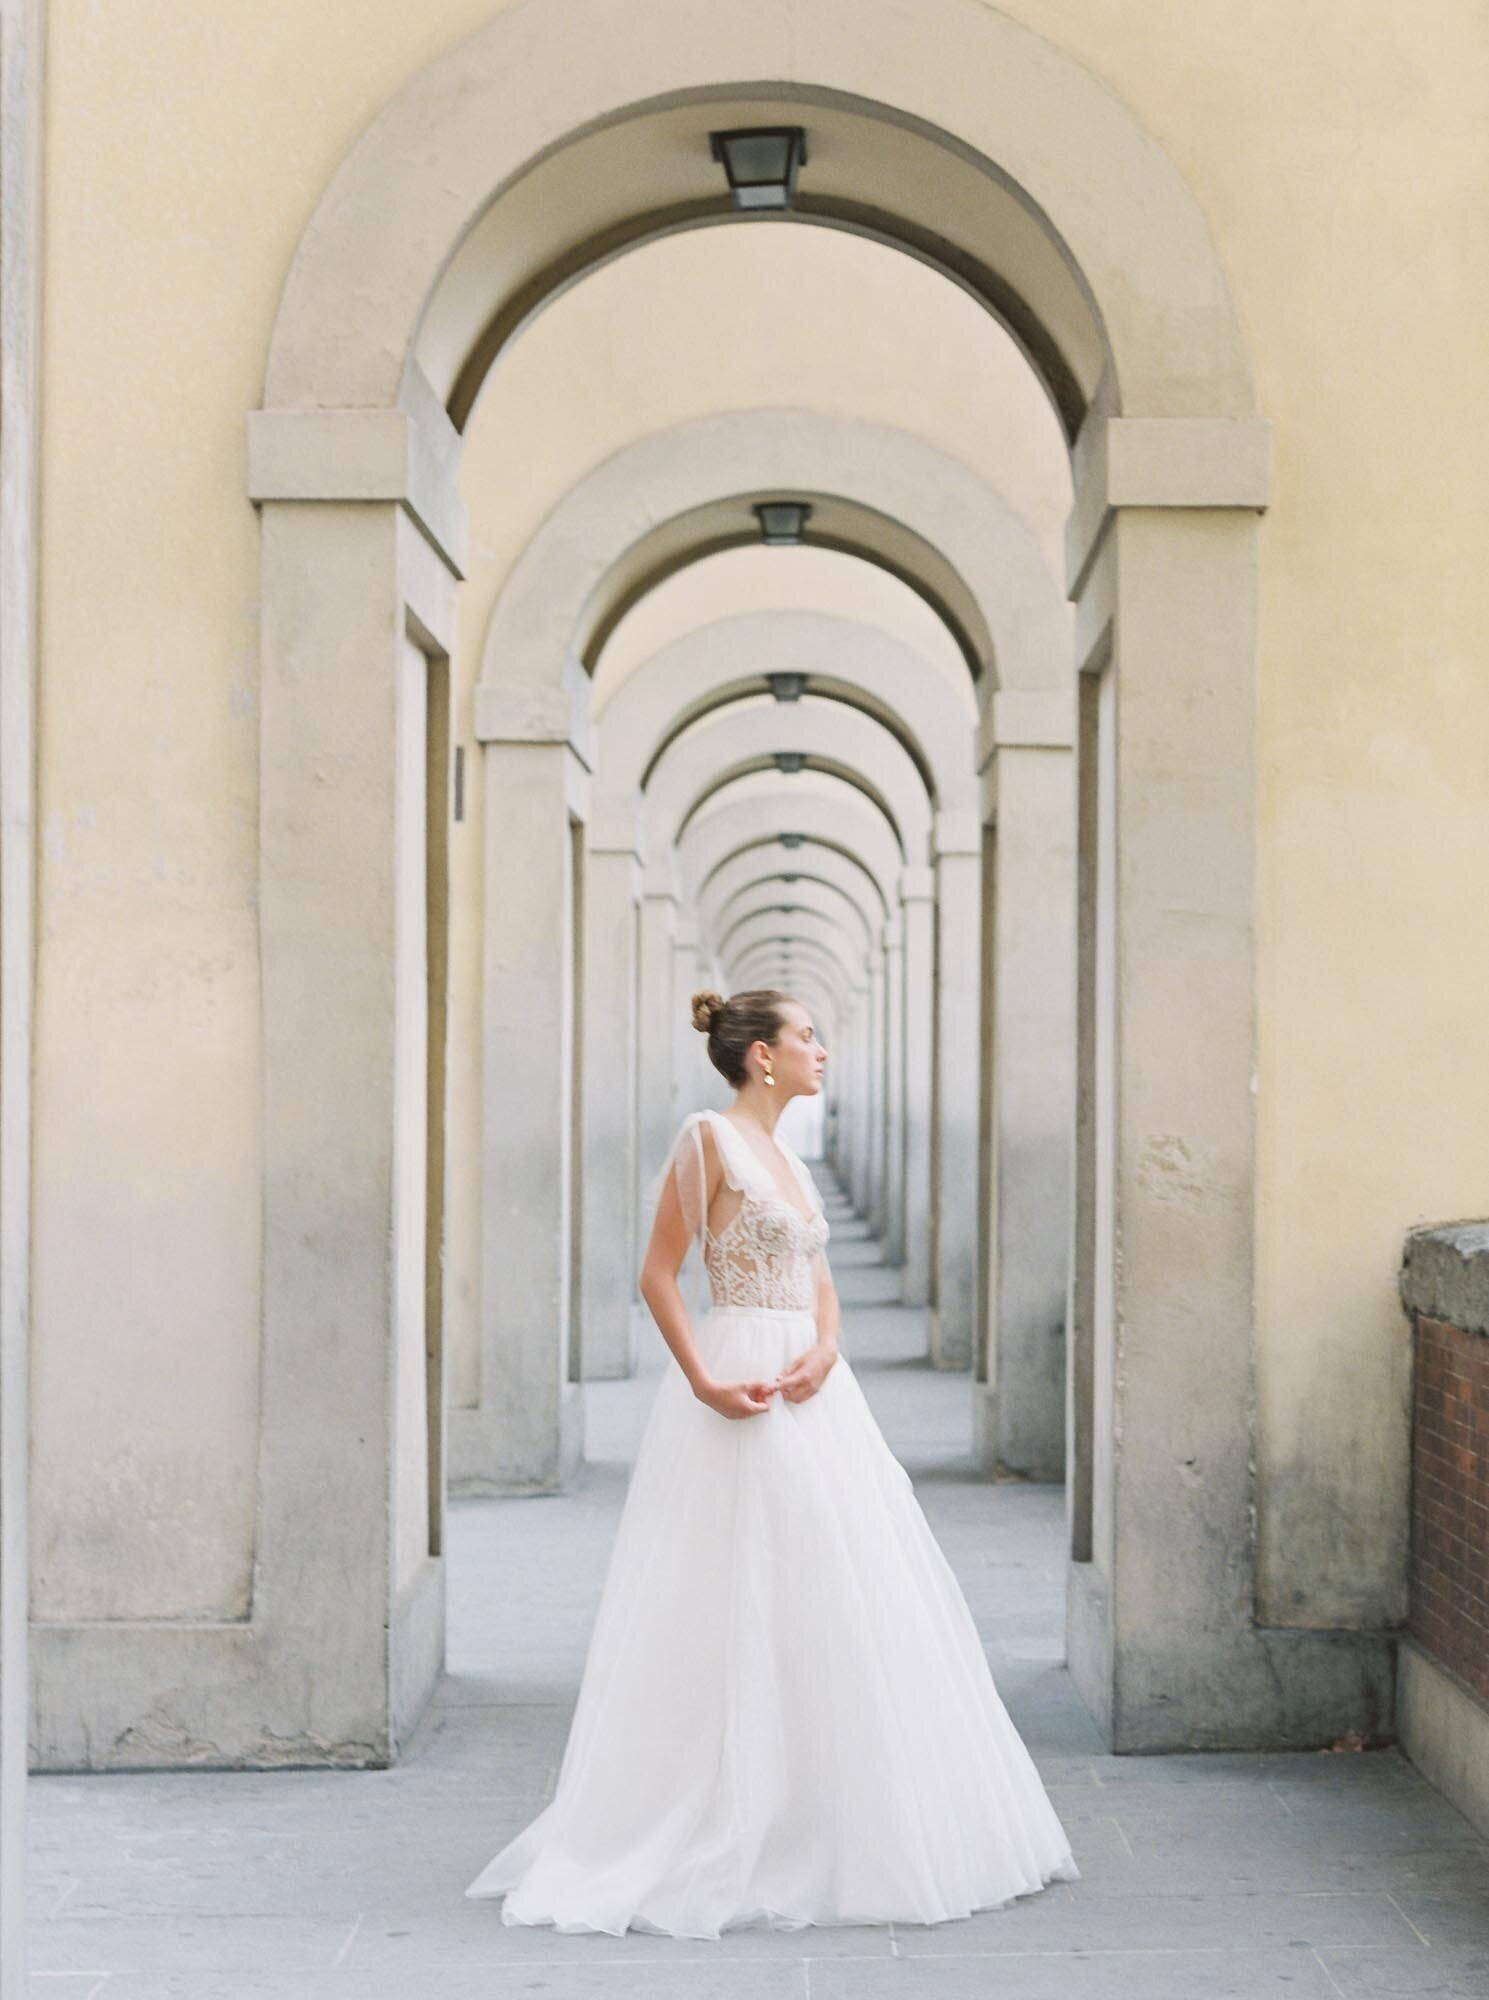 Bide in her bridal dress in Florence